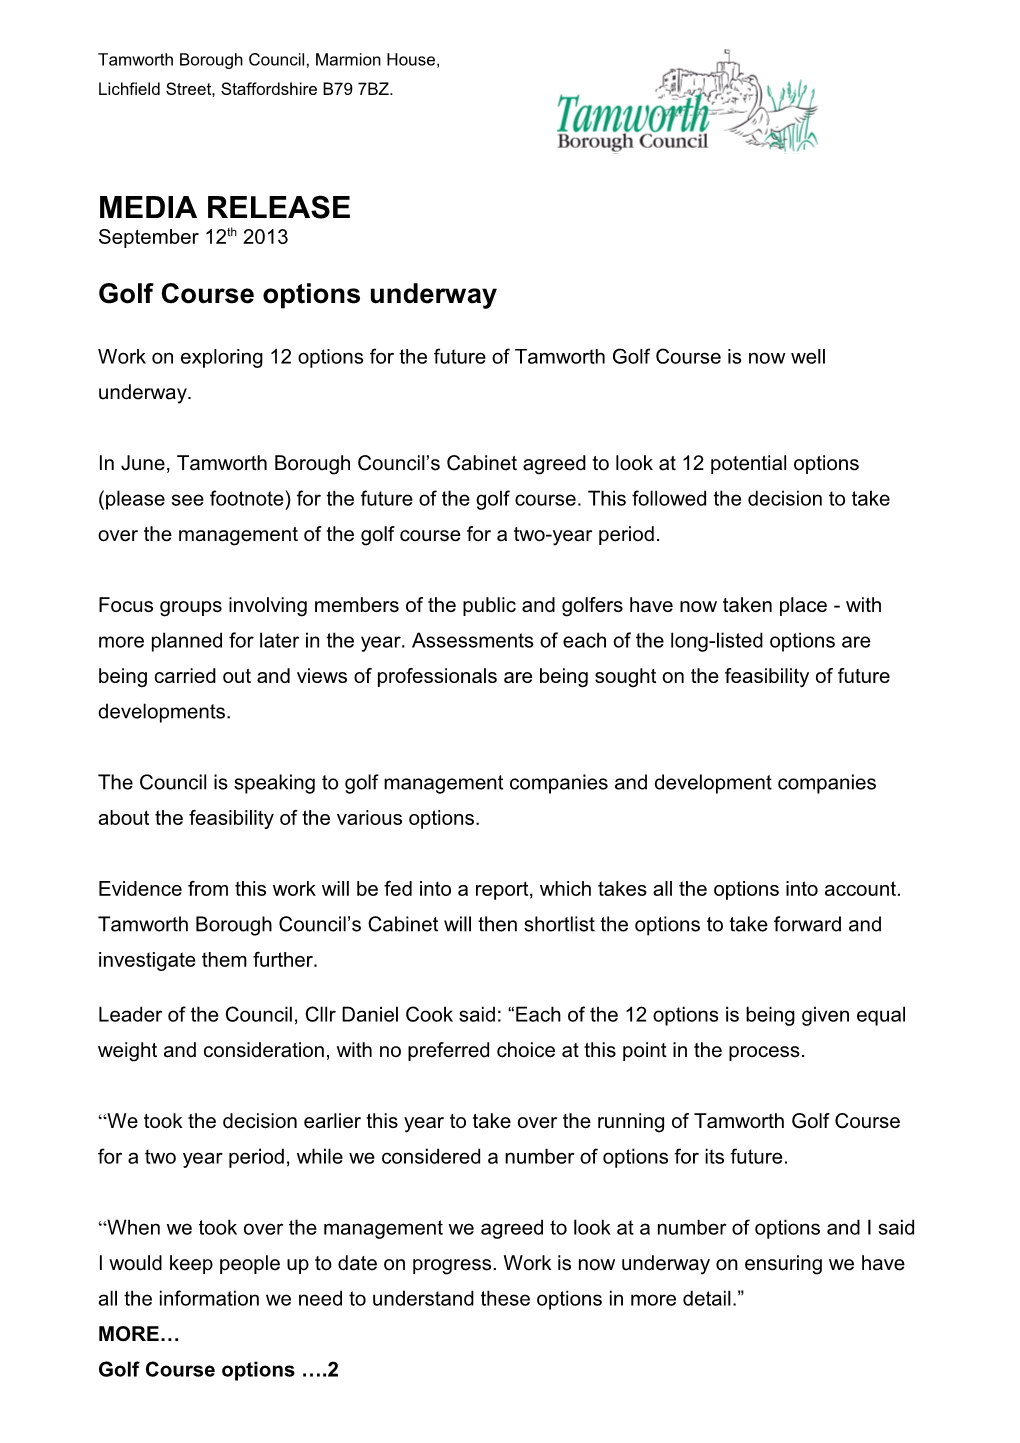 Golf Course Options Underway